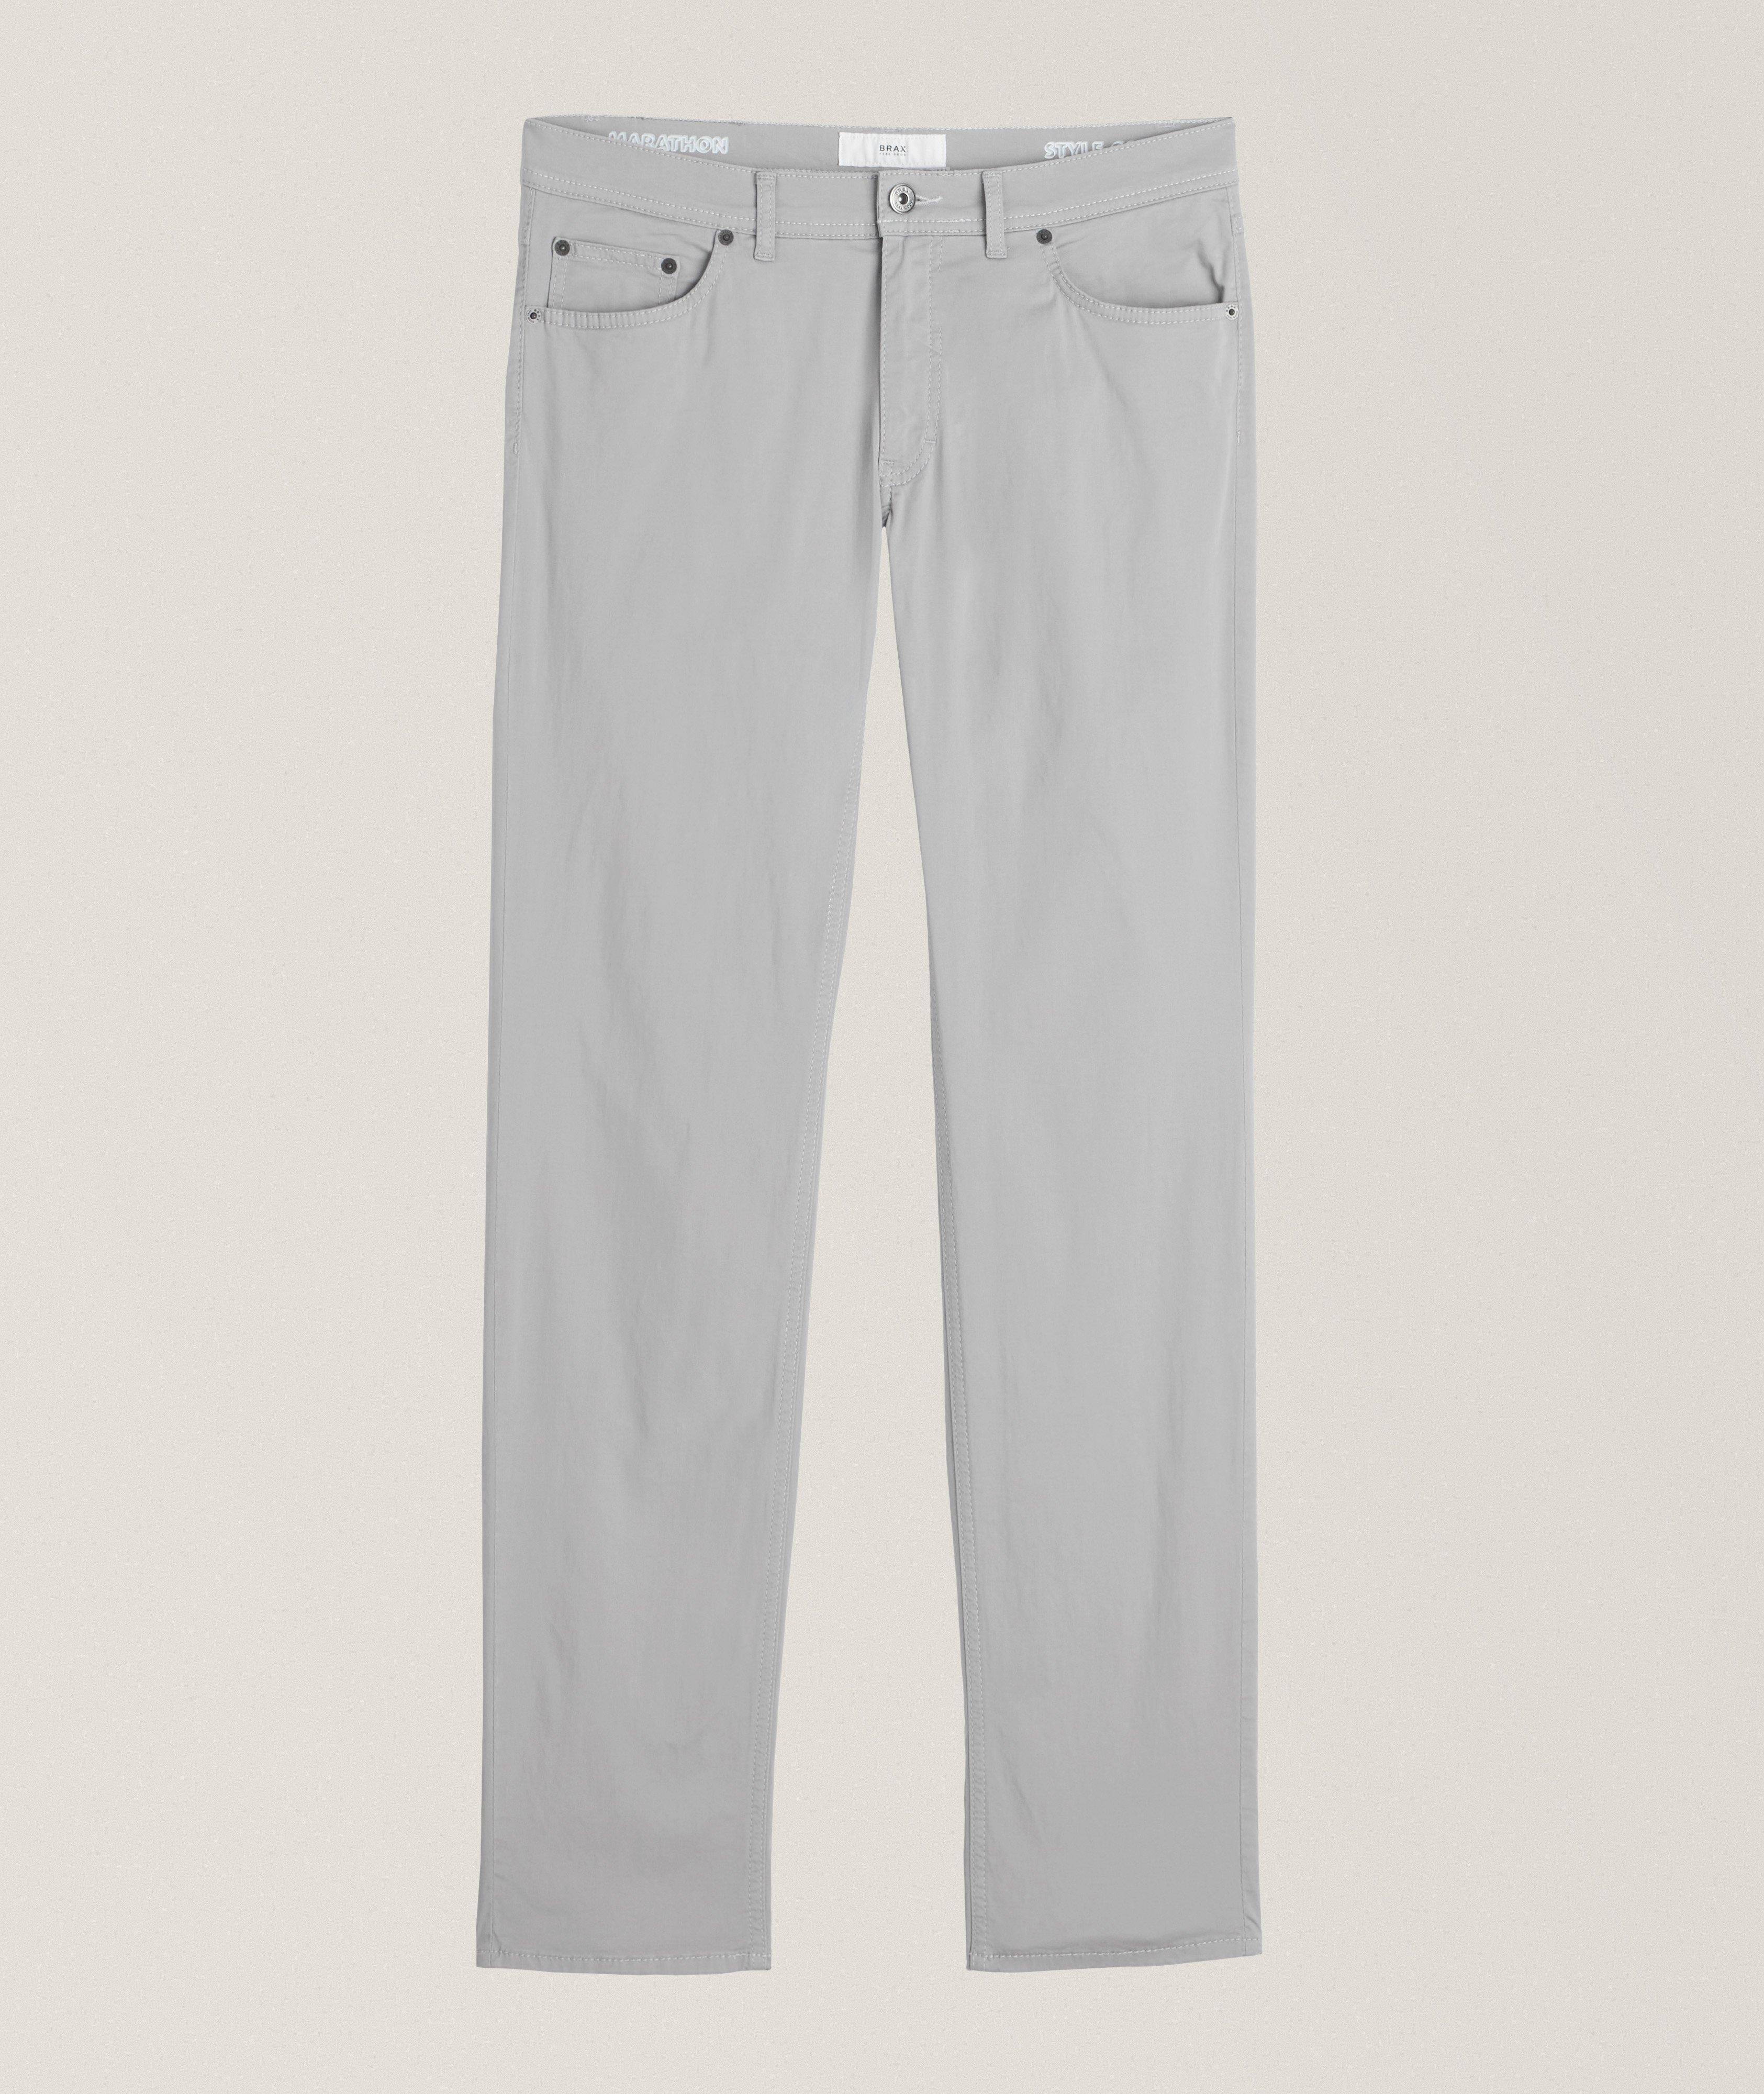 Style Cooper 5-pocket Marathon Pants